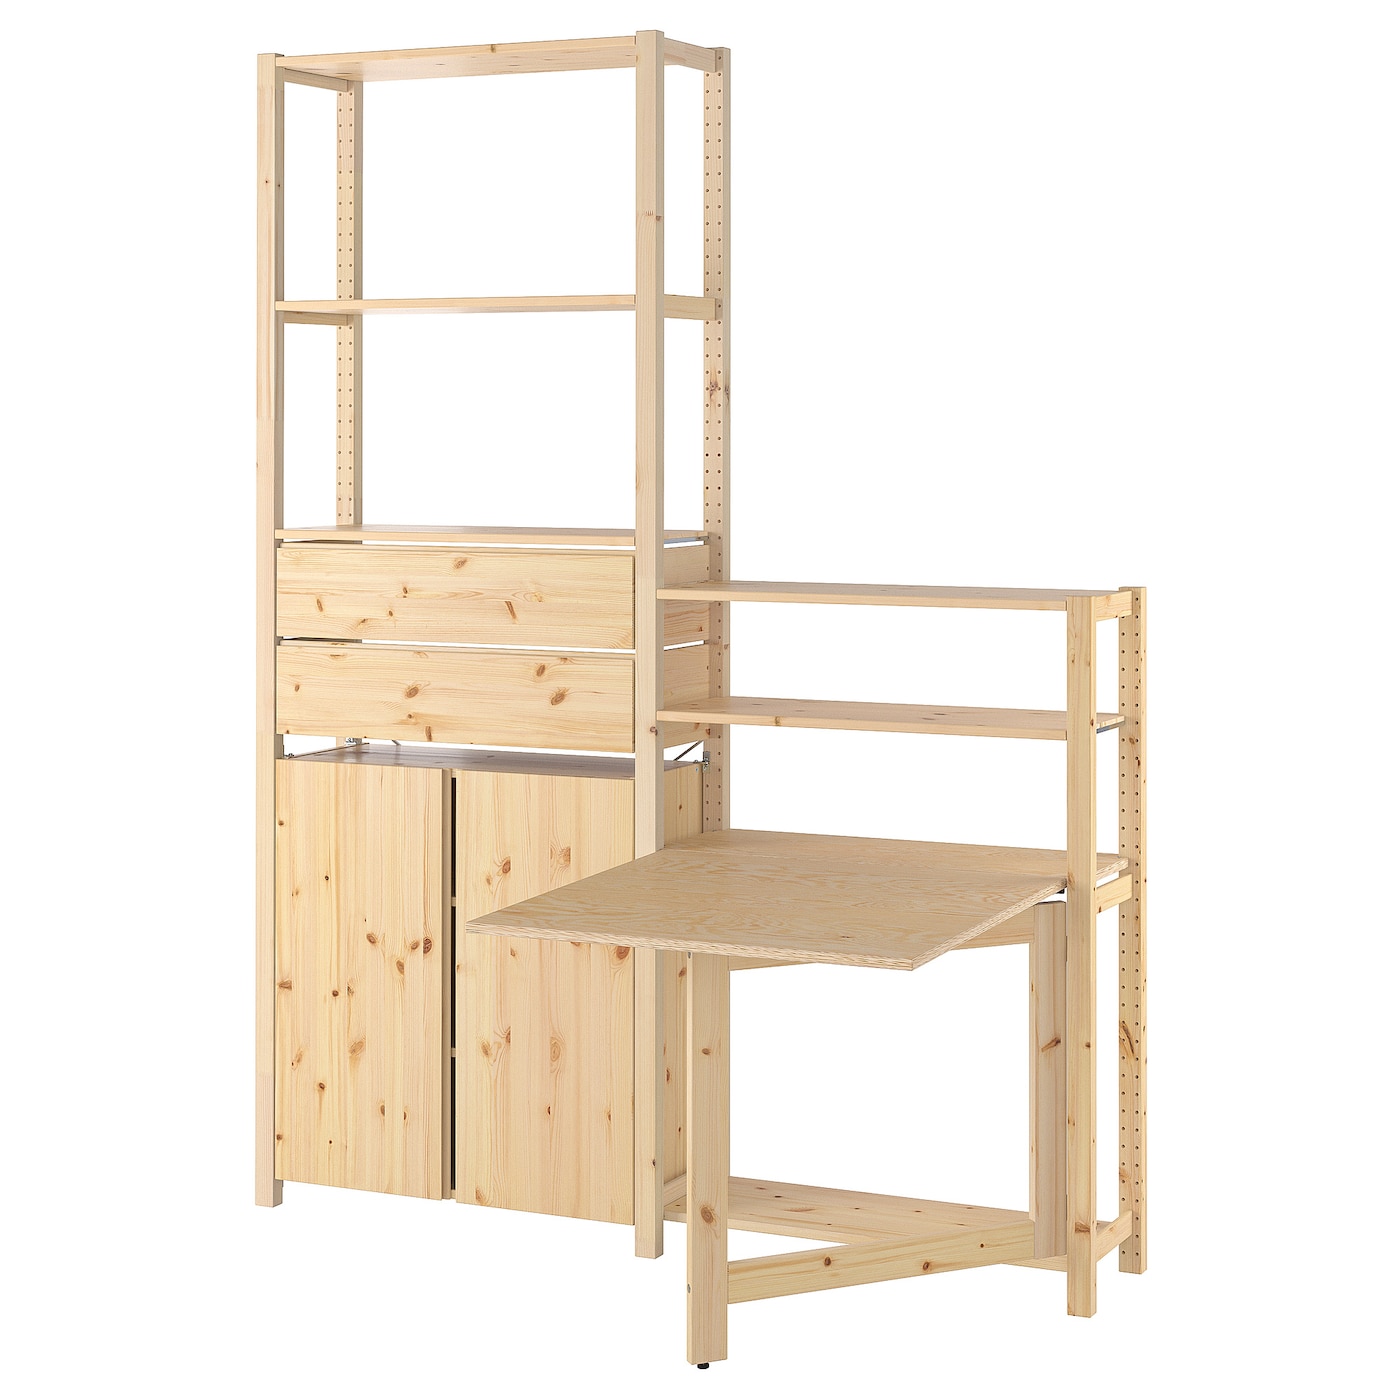 Шкаф со складным столом - IKEA IVAR, 175х30х226 см, сосна, ИВАР ИКЕА